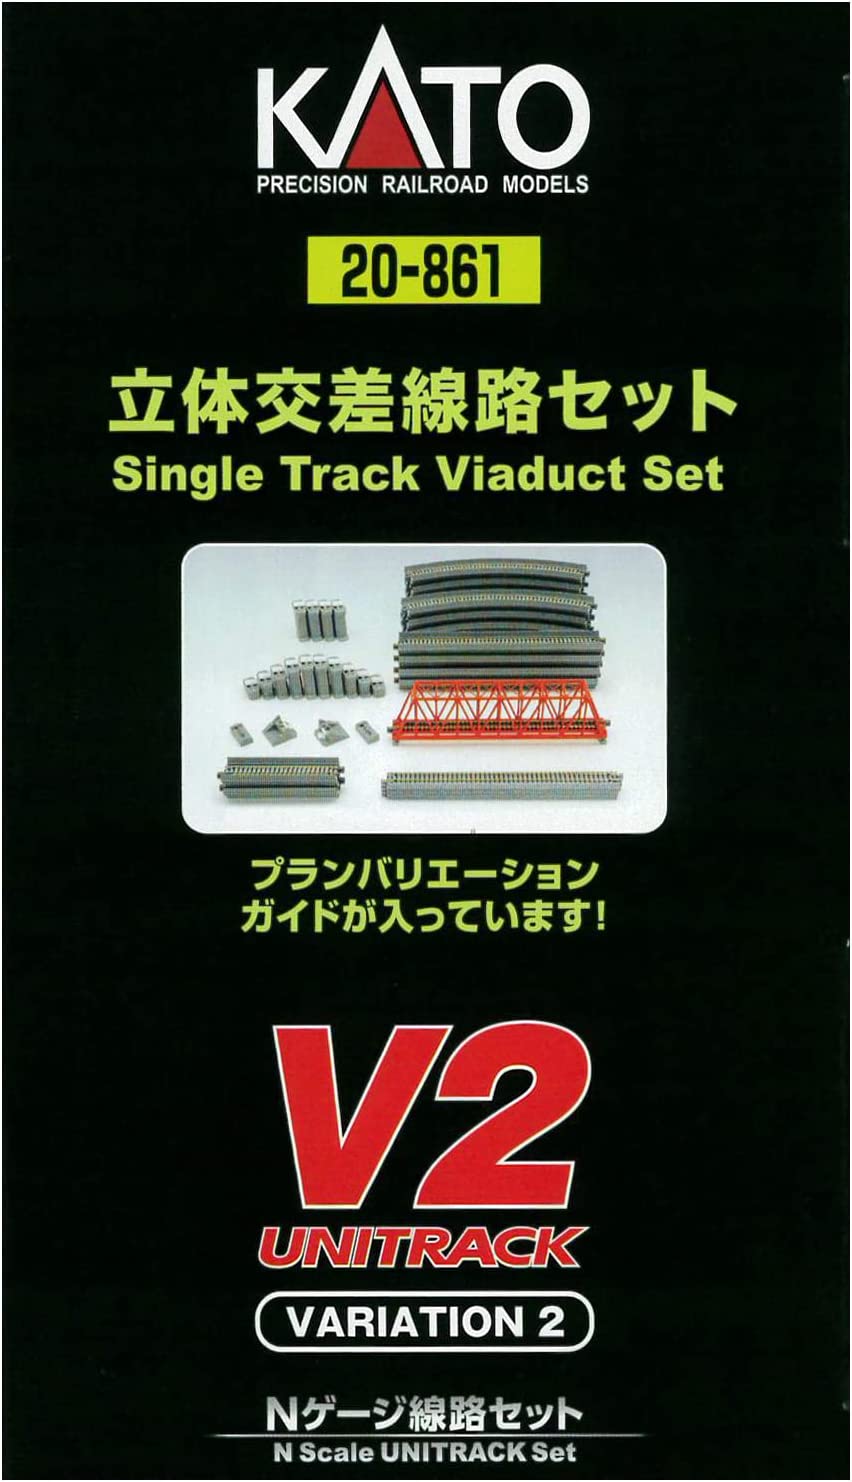 20-861 Unitrack [V2] Single Track Viaduct Set (Variation 2)